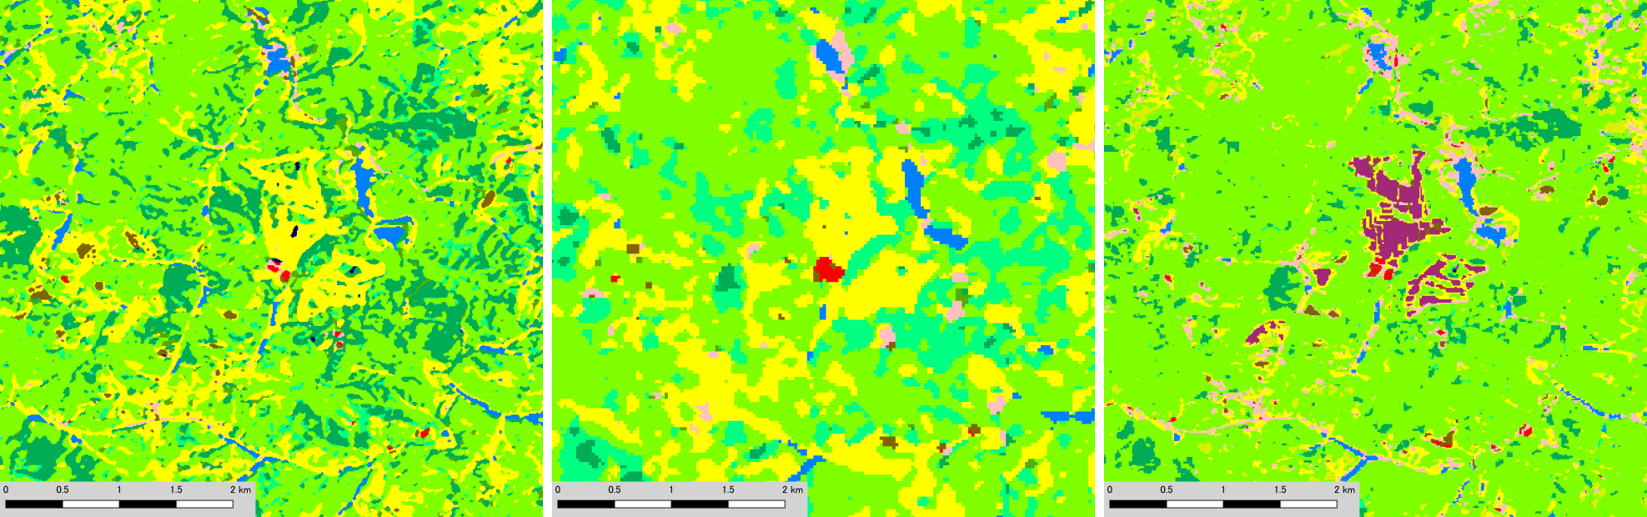 Figure 4: Land cover change from grassland to solar panel (Nihonmatsu City, Fukushima prefecture)